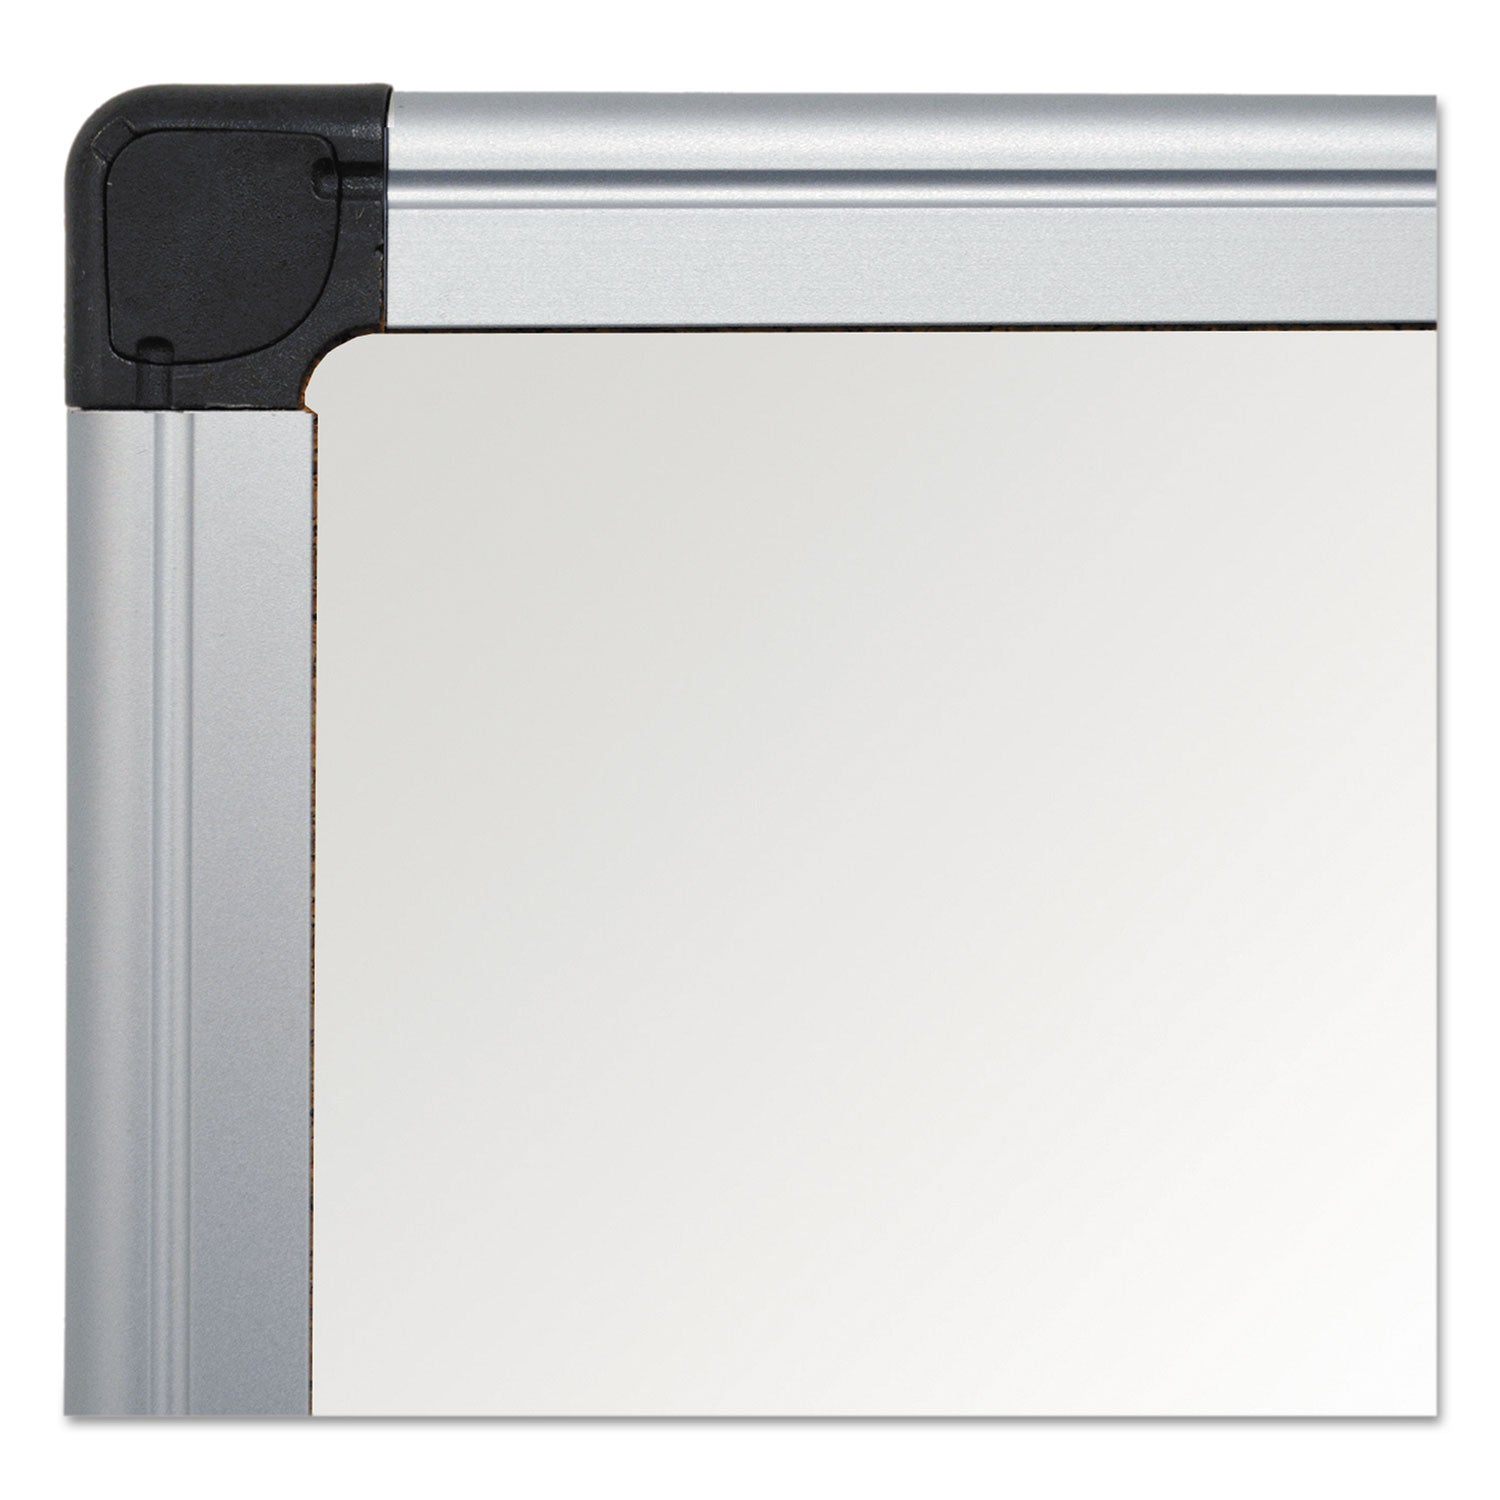 Value Melamine Dry Erase Board, 36 x 48, White Surface, Silver Aluminum Frame - 